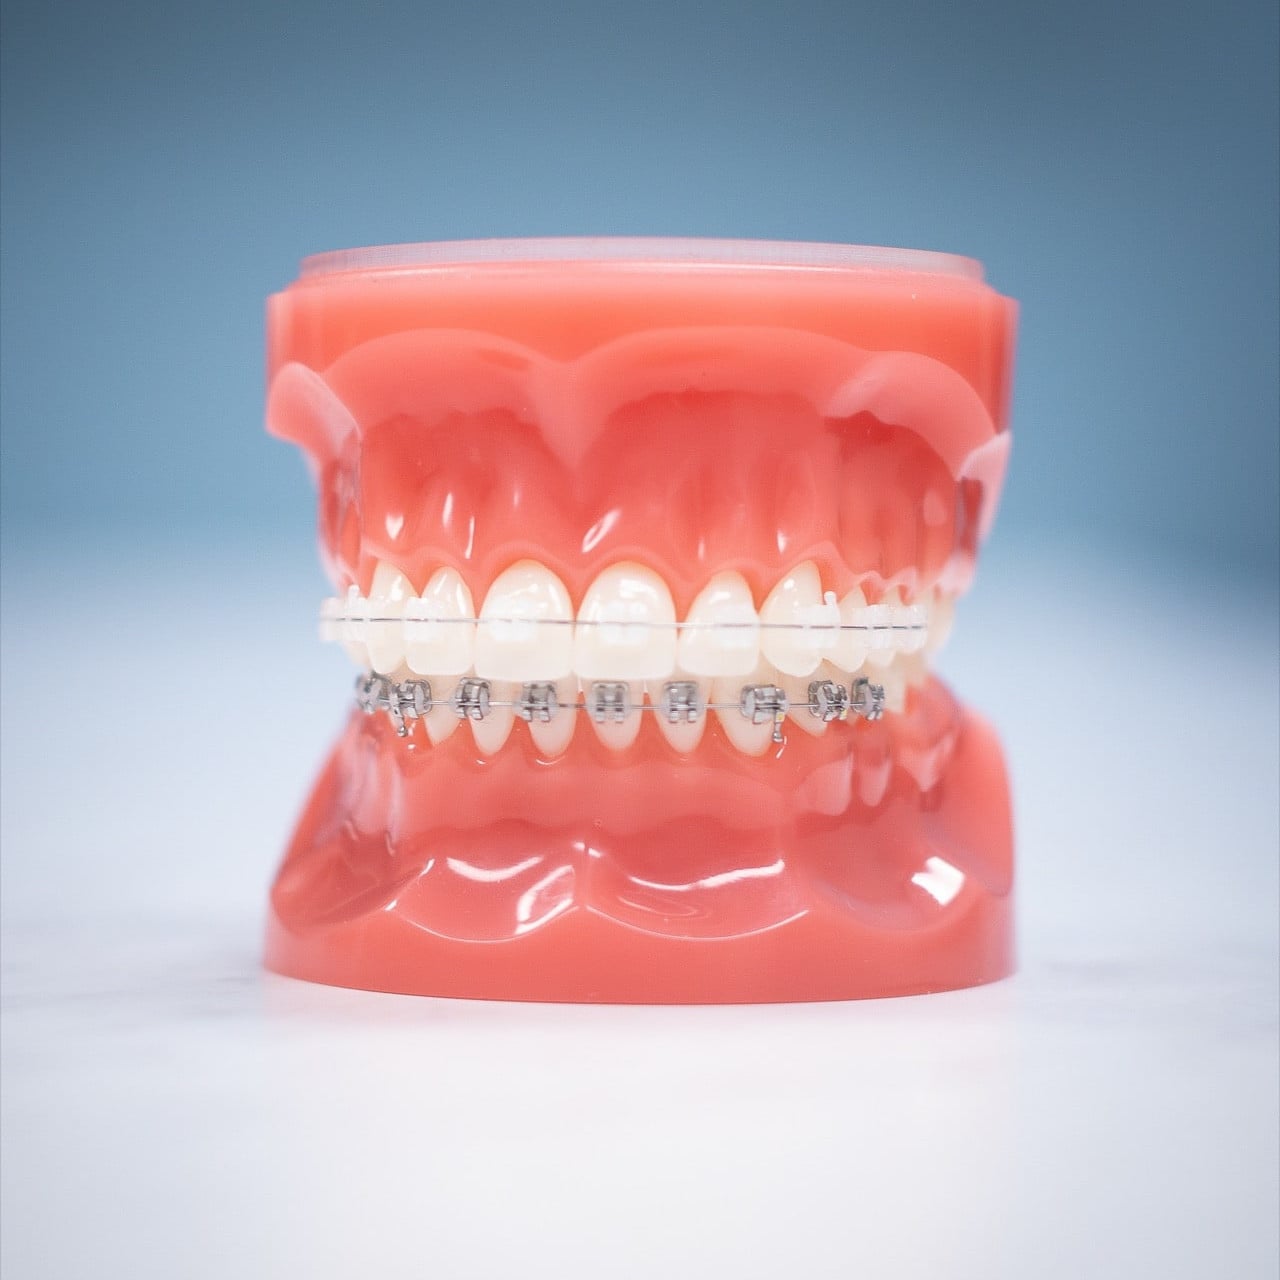 Orthodontics Model with Ceramic and Metal Brackets Teach Model